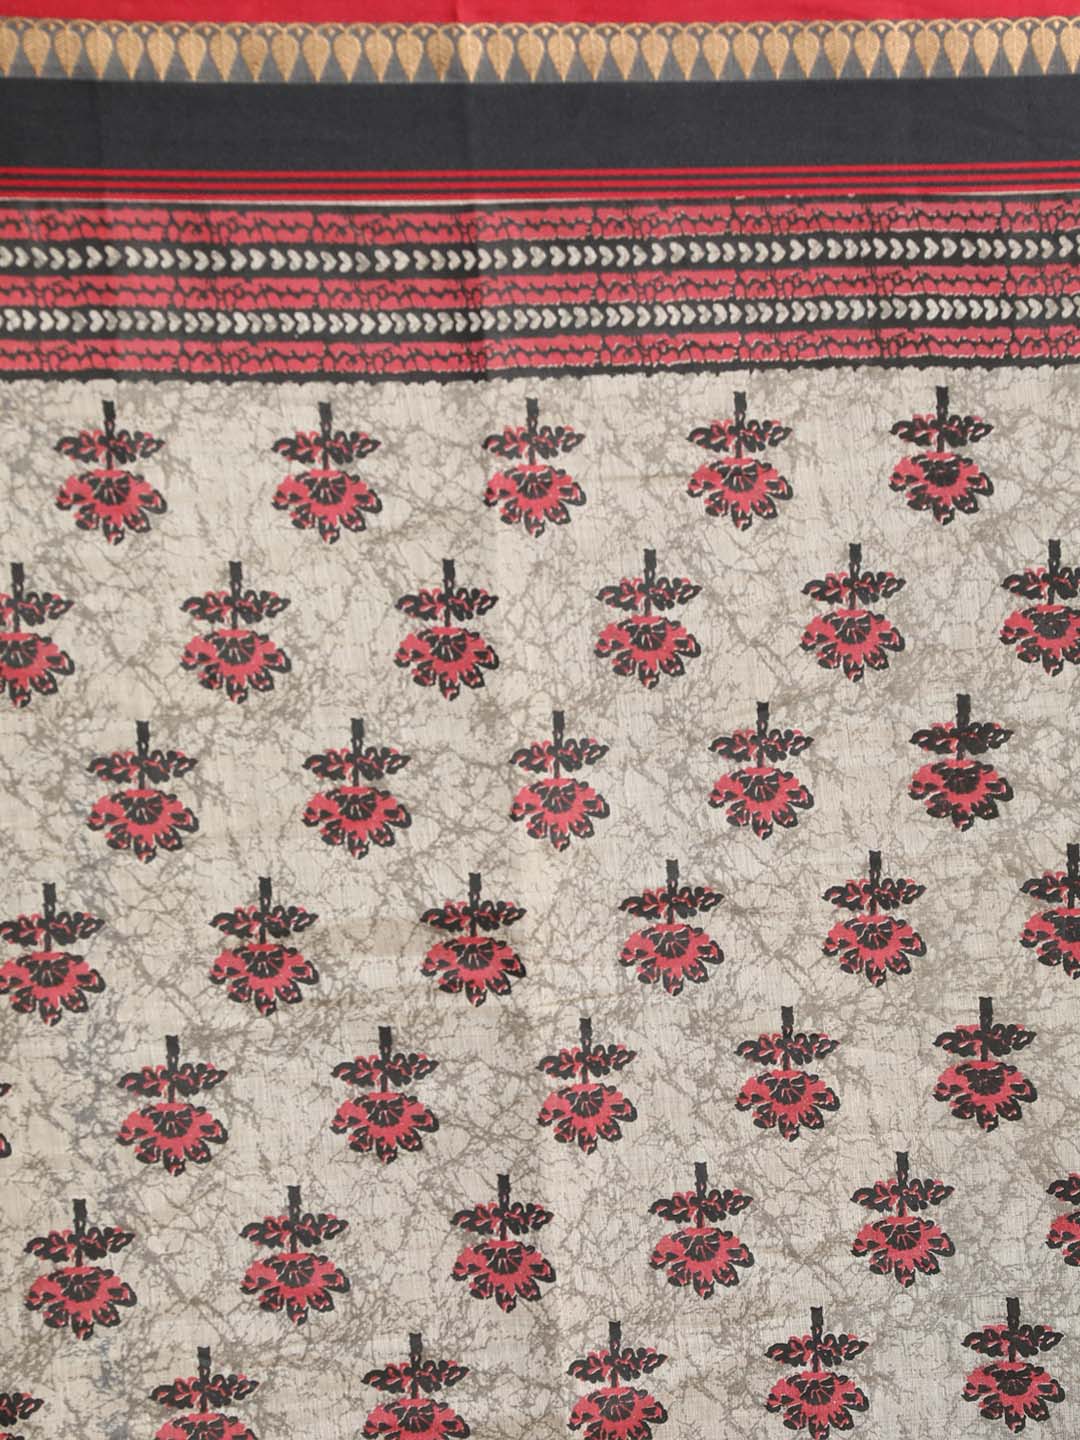 Indethnic Printed Cotton Blend Saree in Black - Saree Detail View